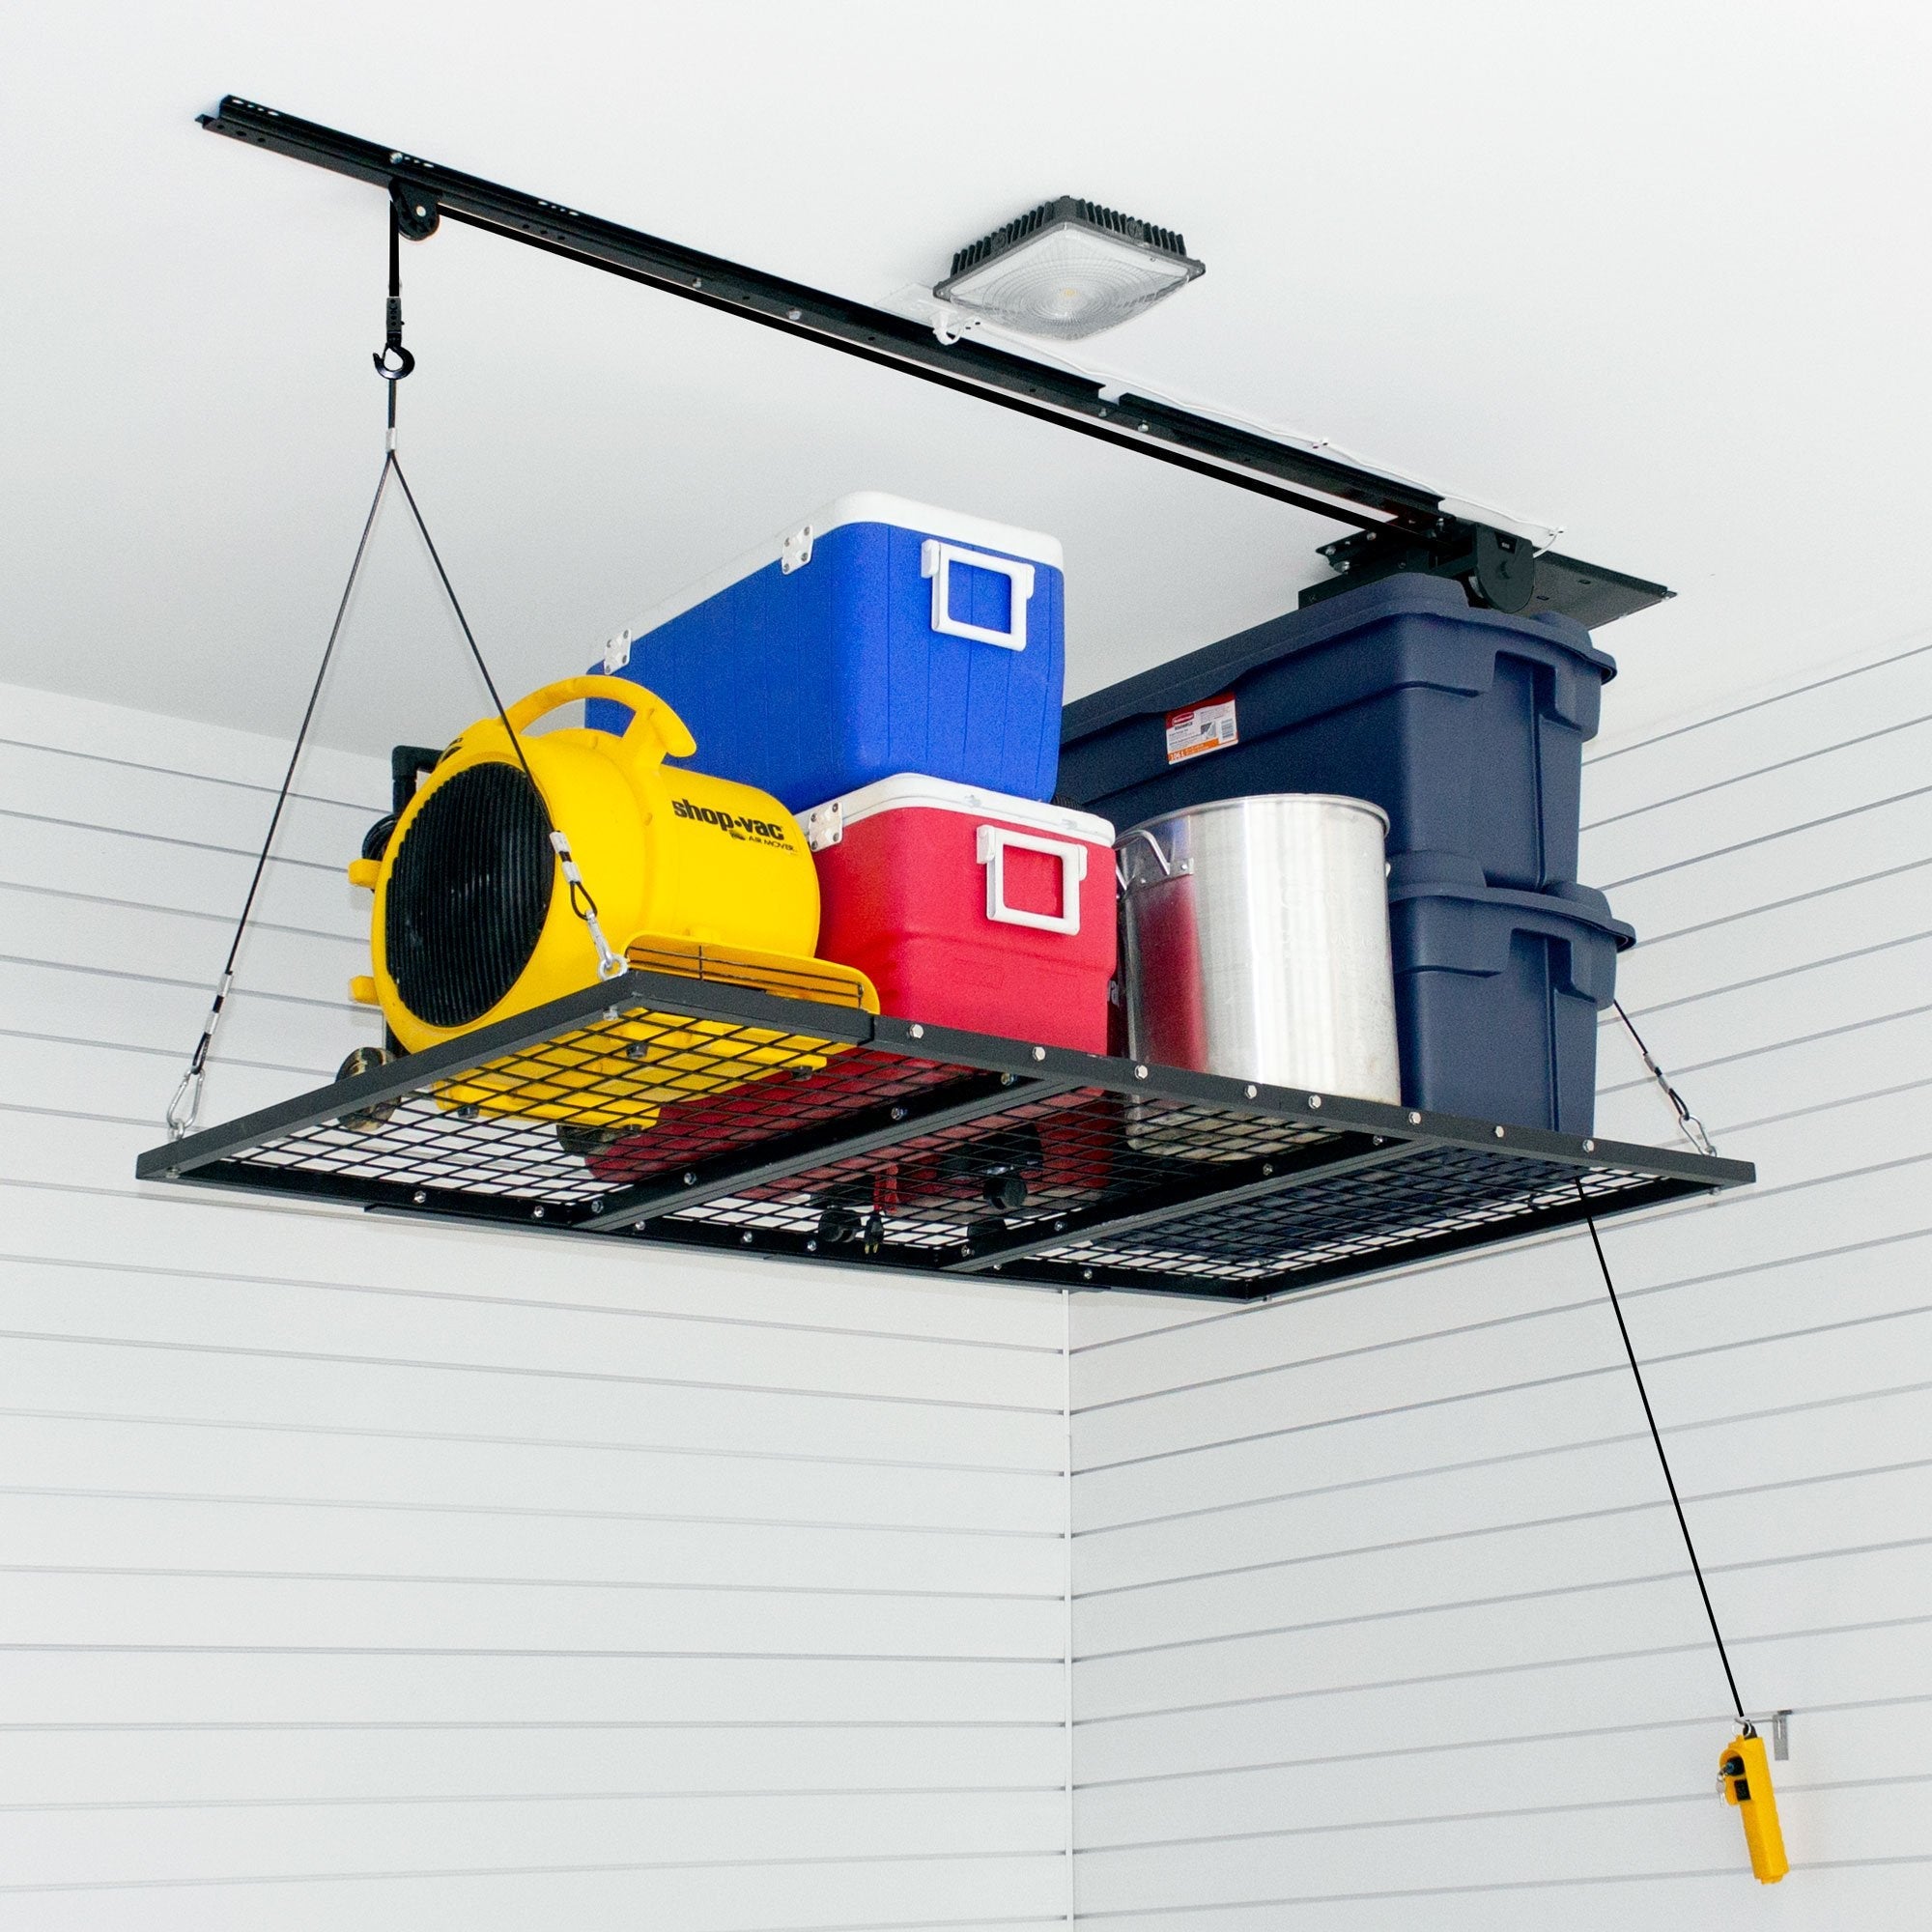 Proslat Garage Gator 3 ft x 6 ft Platform 220 lb Lift Kit - 